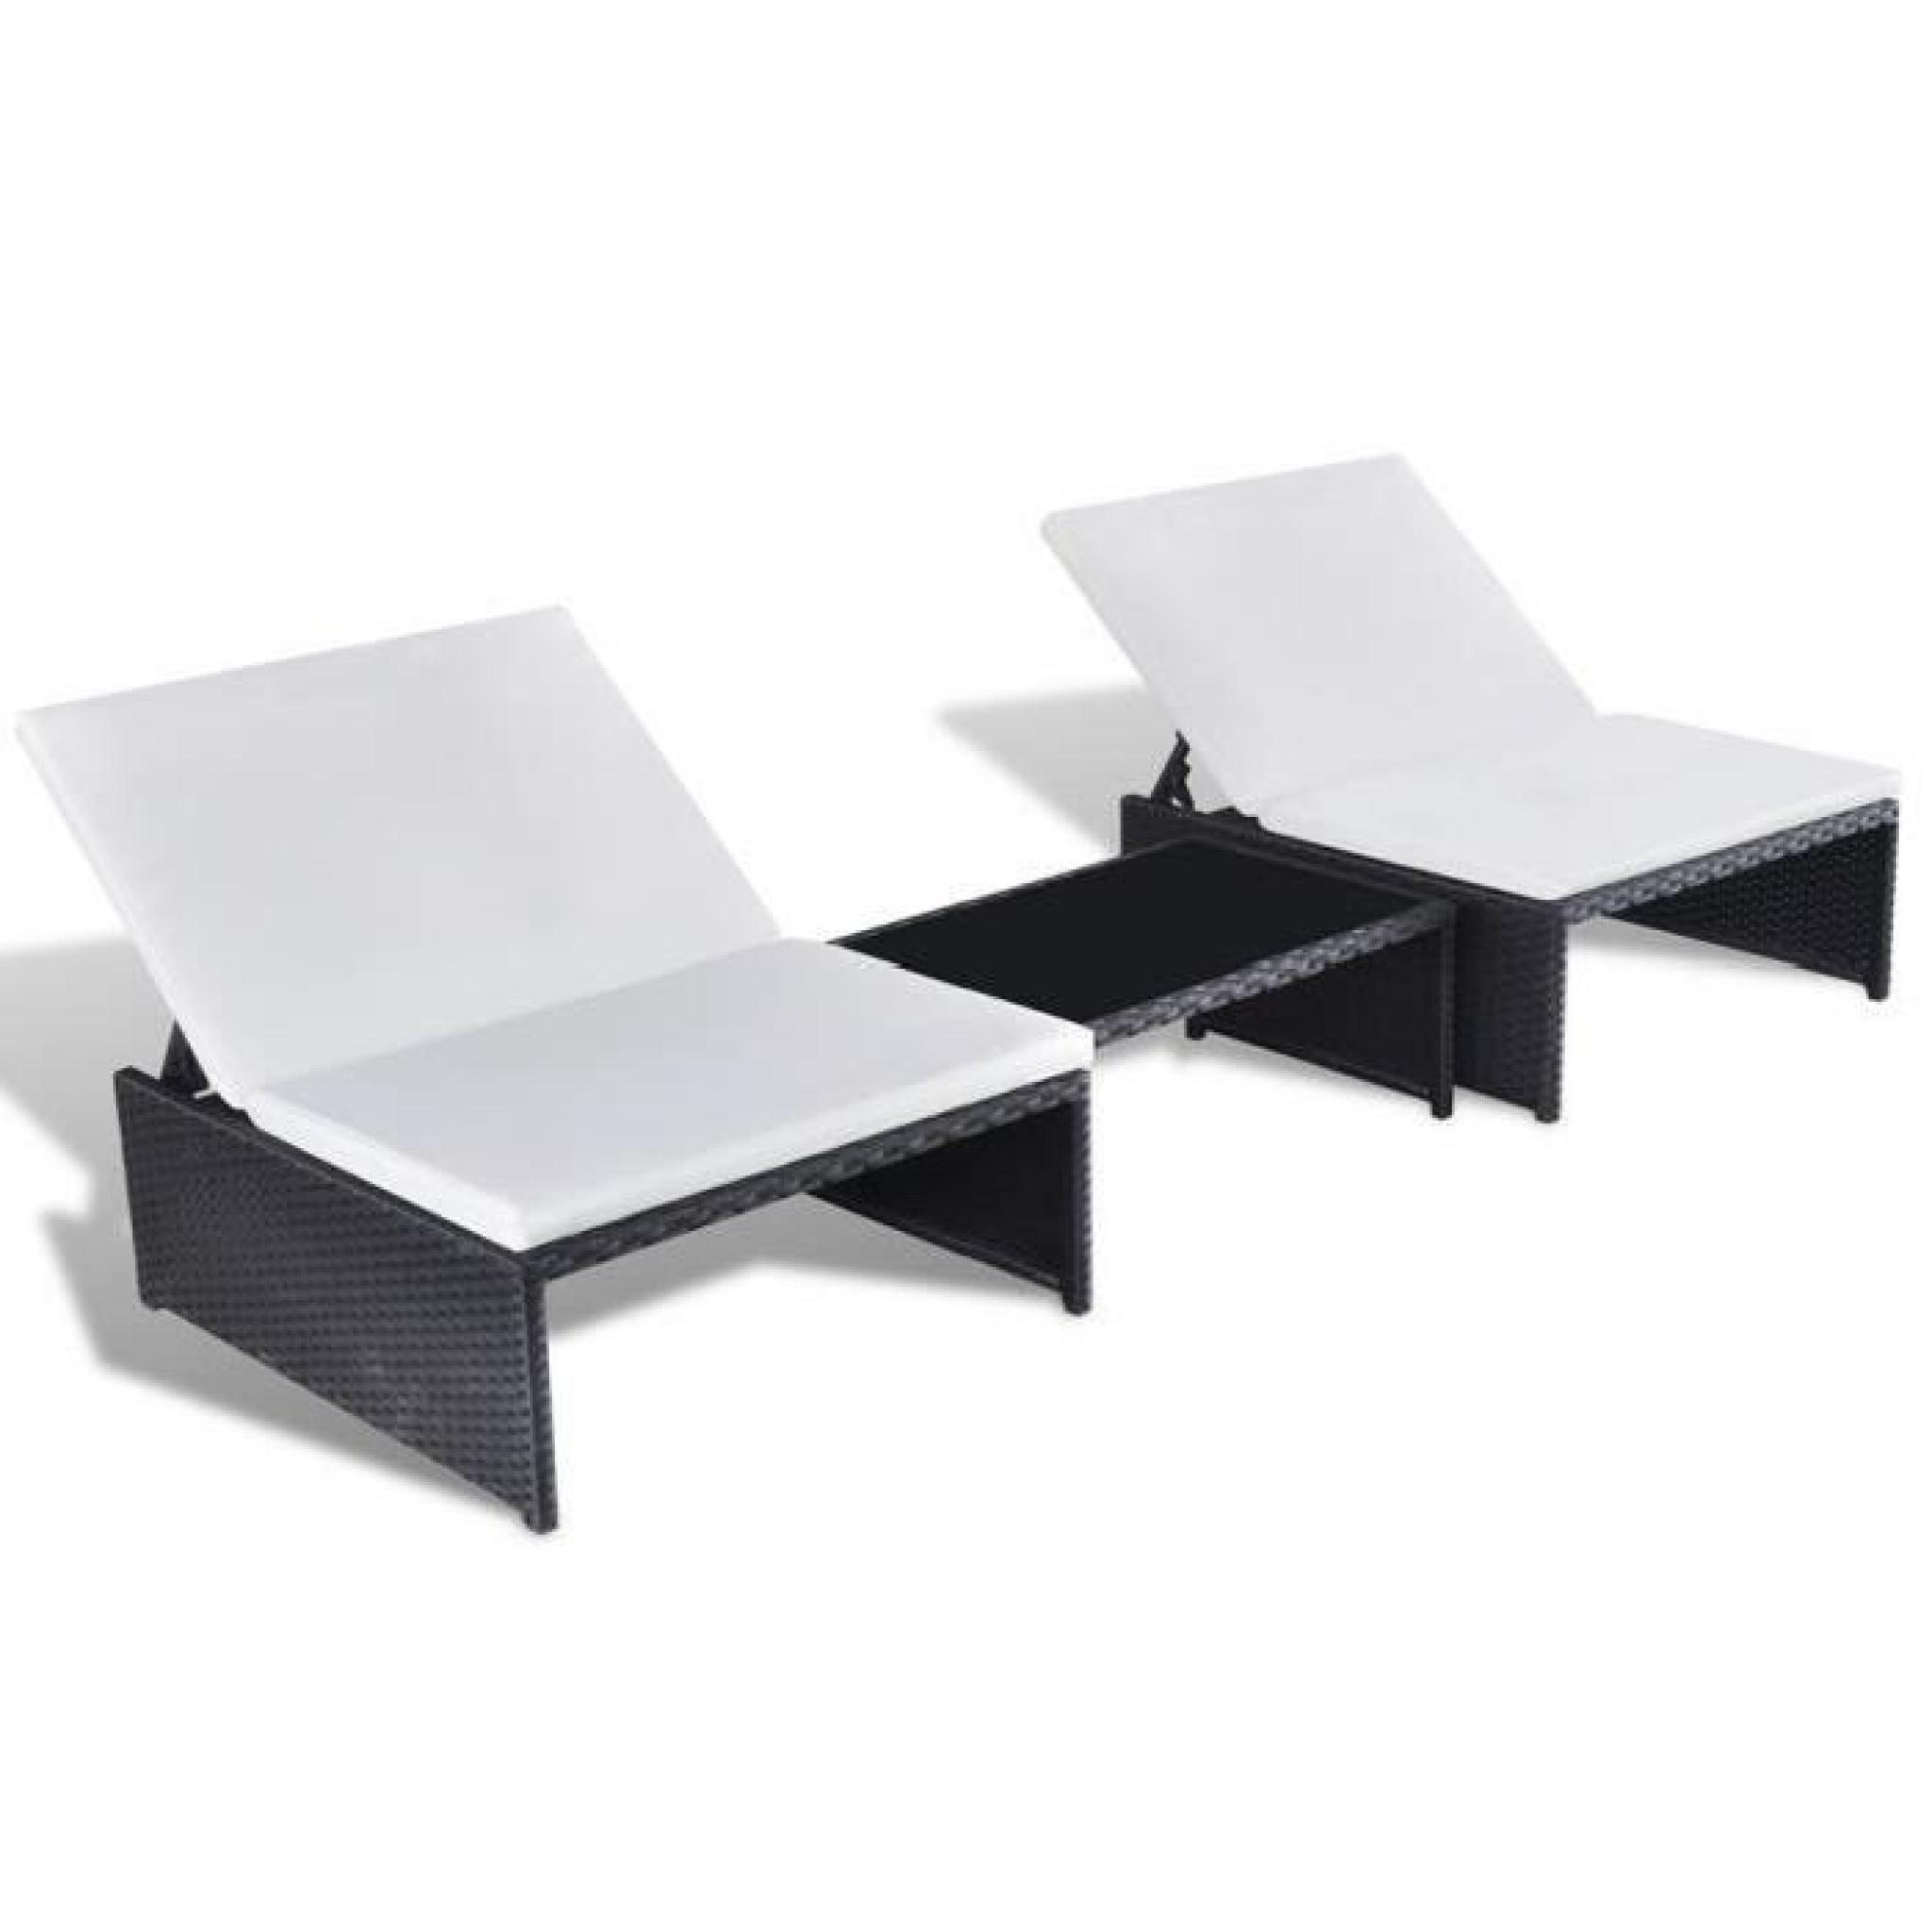 Salon de jardin 2 fauteuils en polyrotin noir avec dossiers ajustables MAJA+